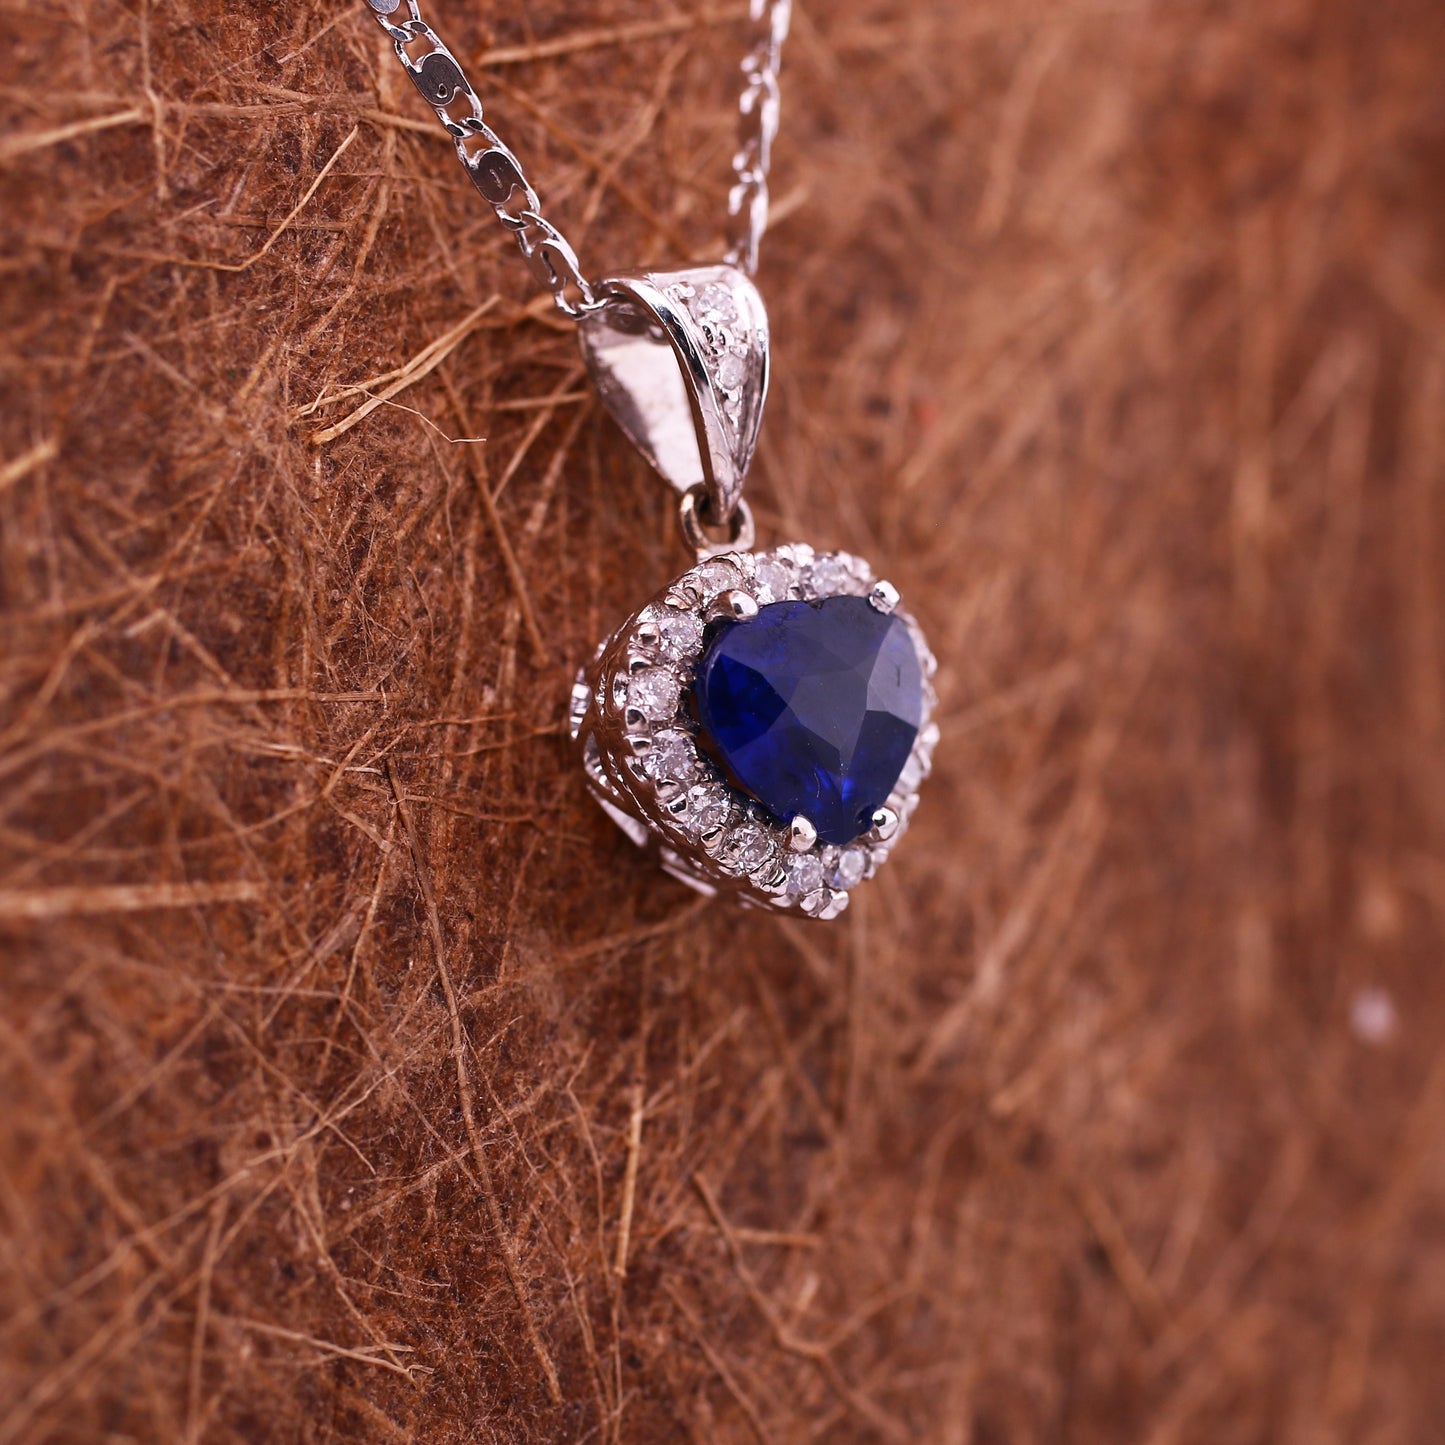 A unique 18K White Gold Pendant with a excellent natural Heart cut Blue Sapphire in the Center. A Heart design Diamond halo enhances the vivid blue of the Precious Stone.